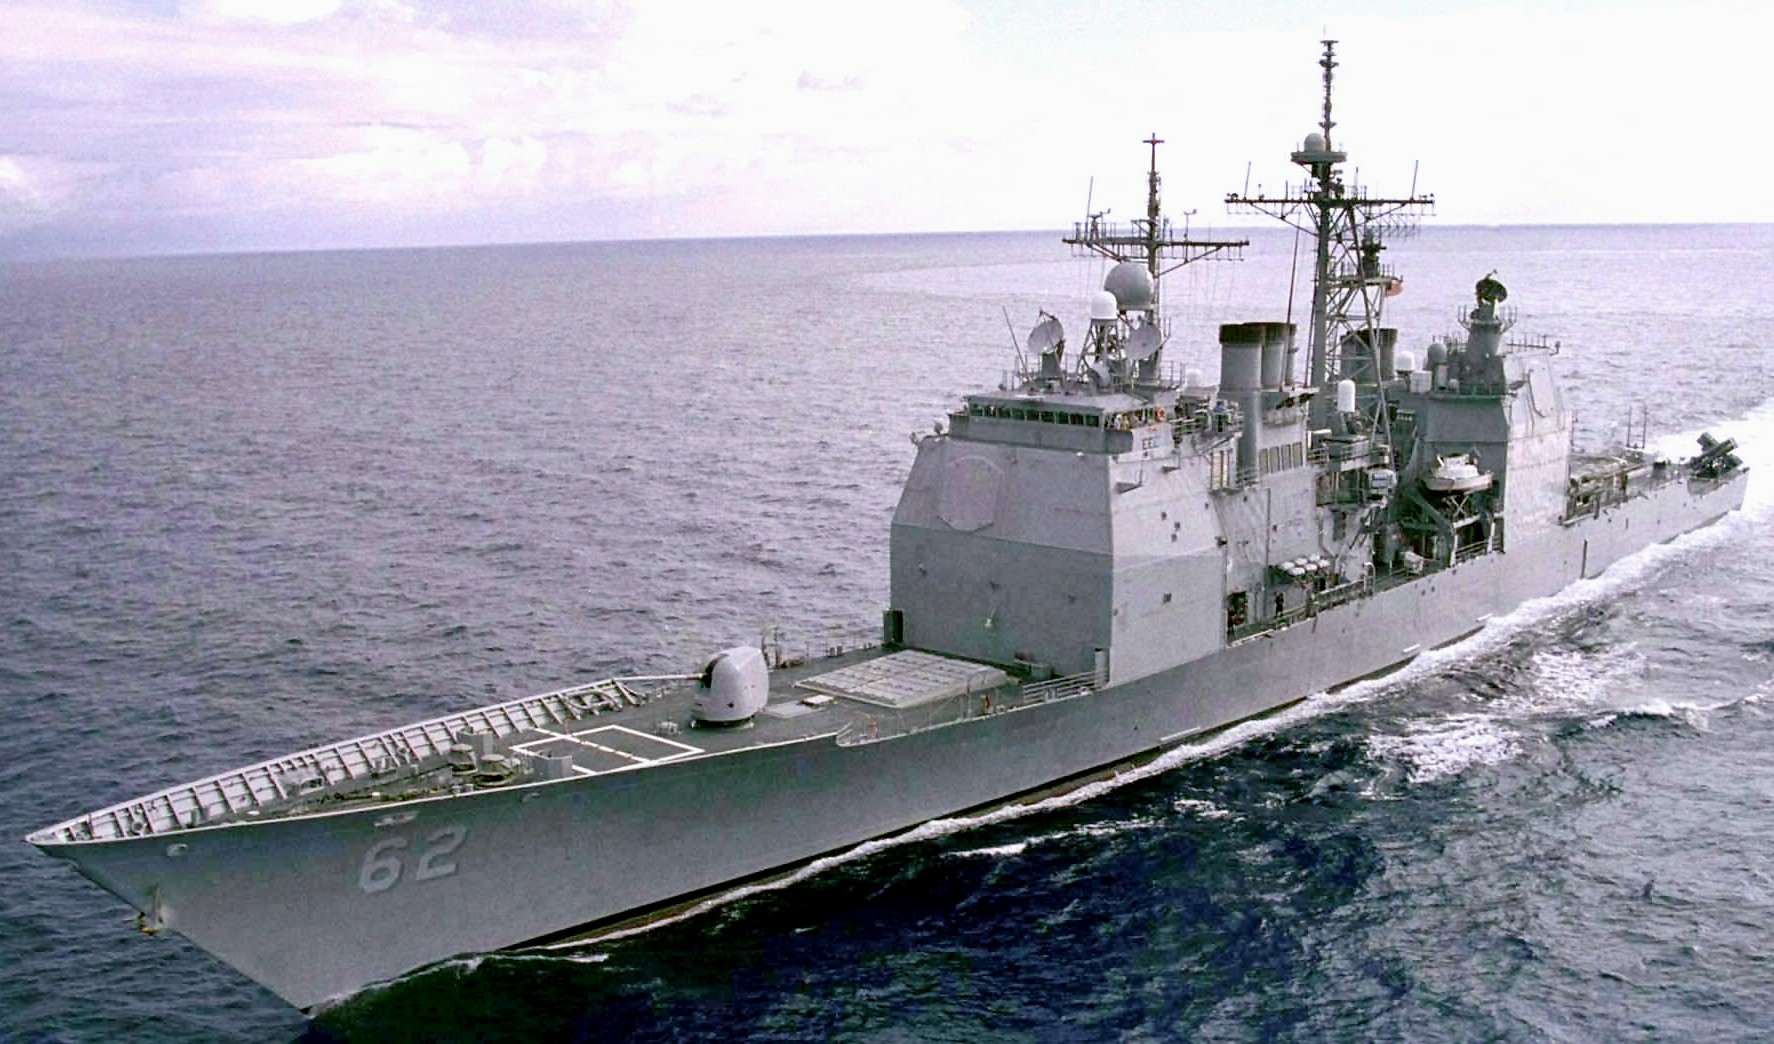 cg-62 uss chancellorsville ticonderoga class guided missile cruiser aegis us navy philippine sea 130